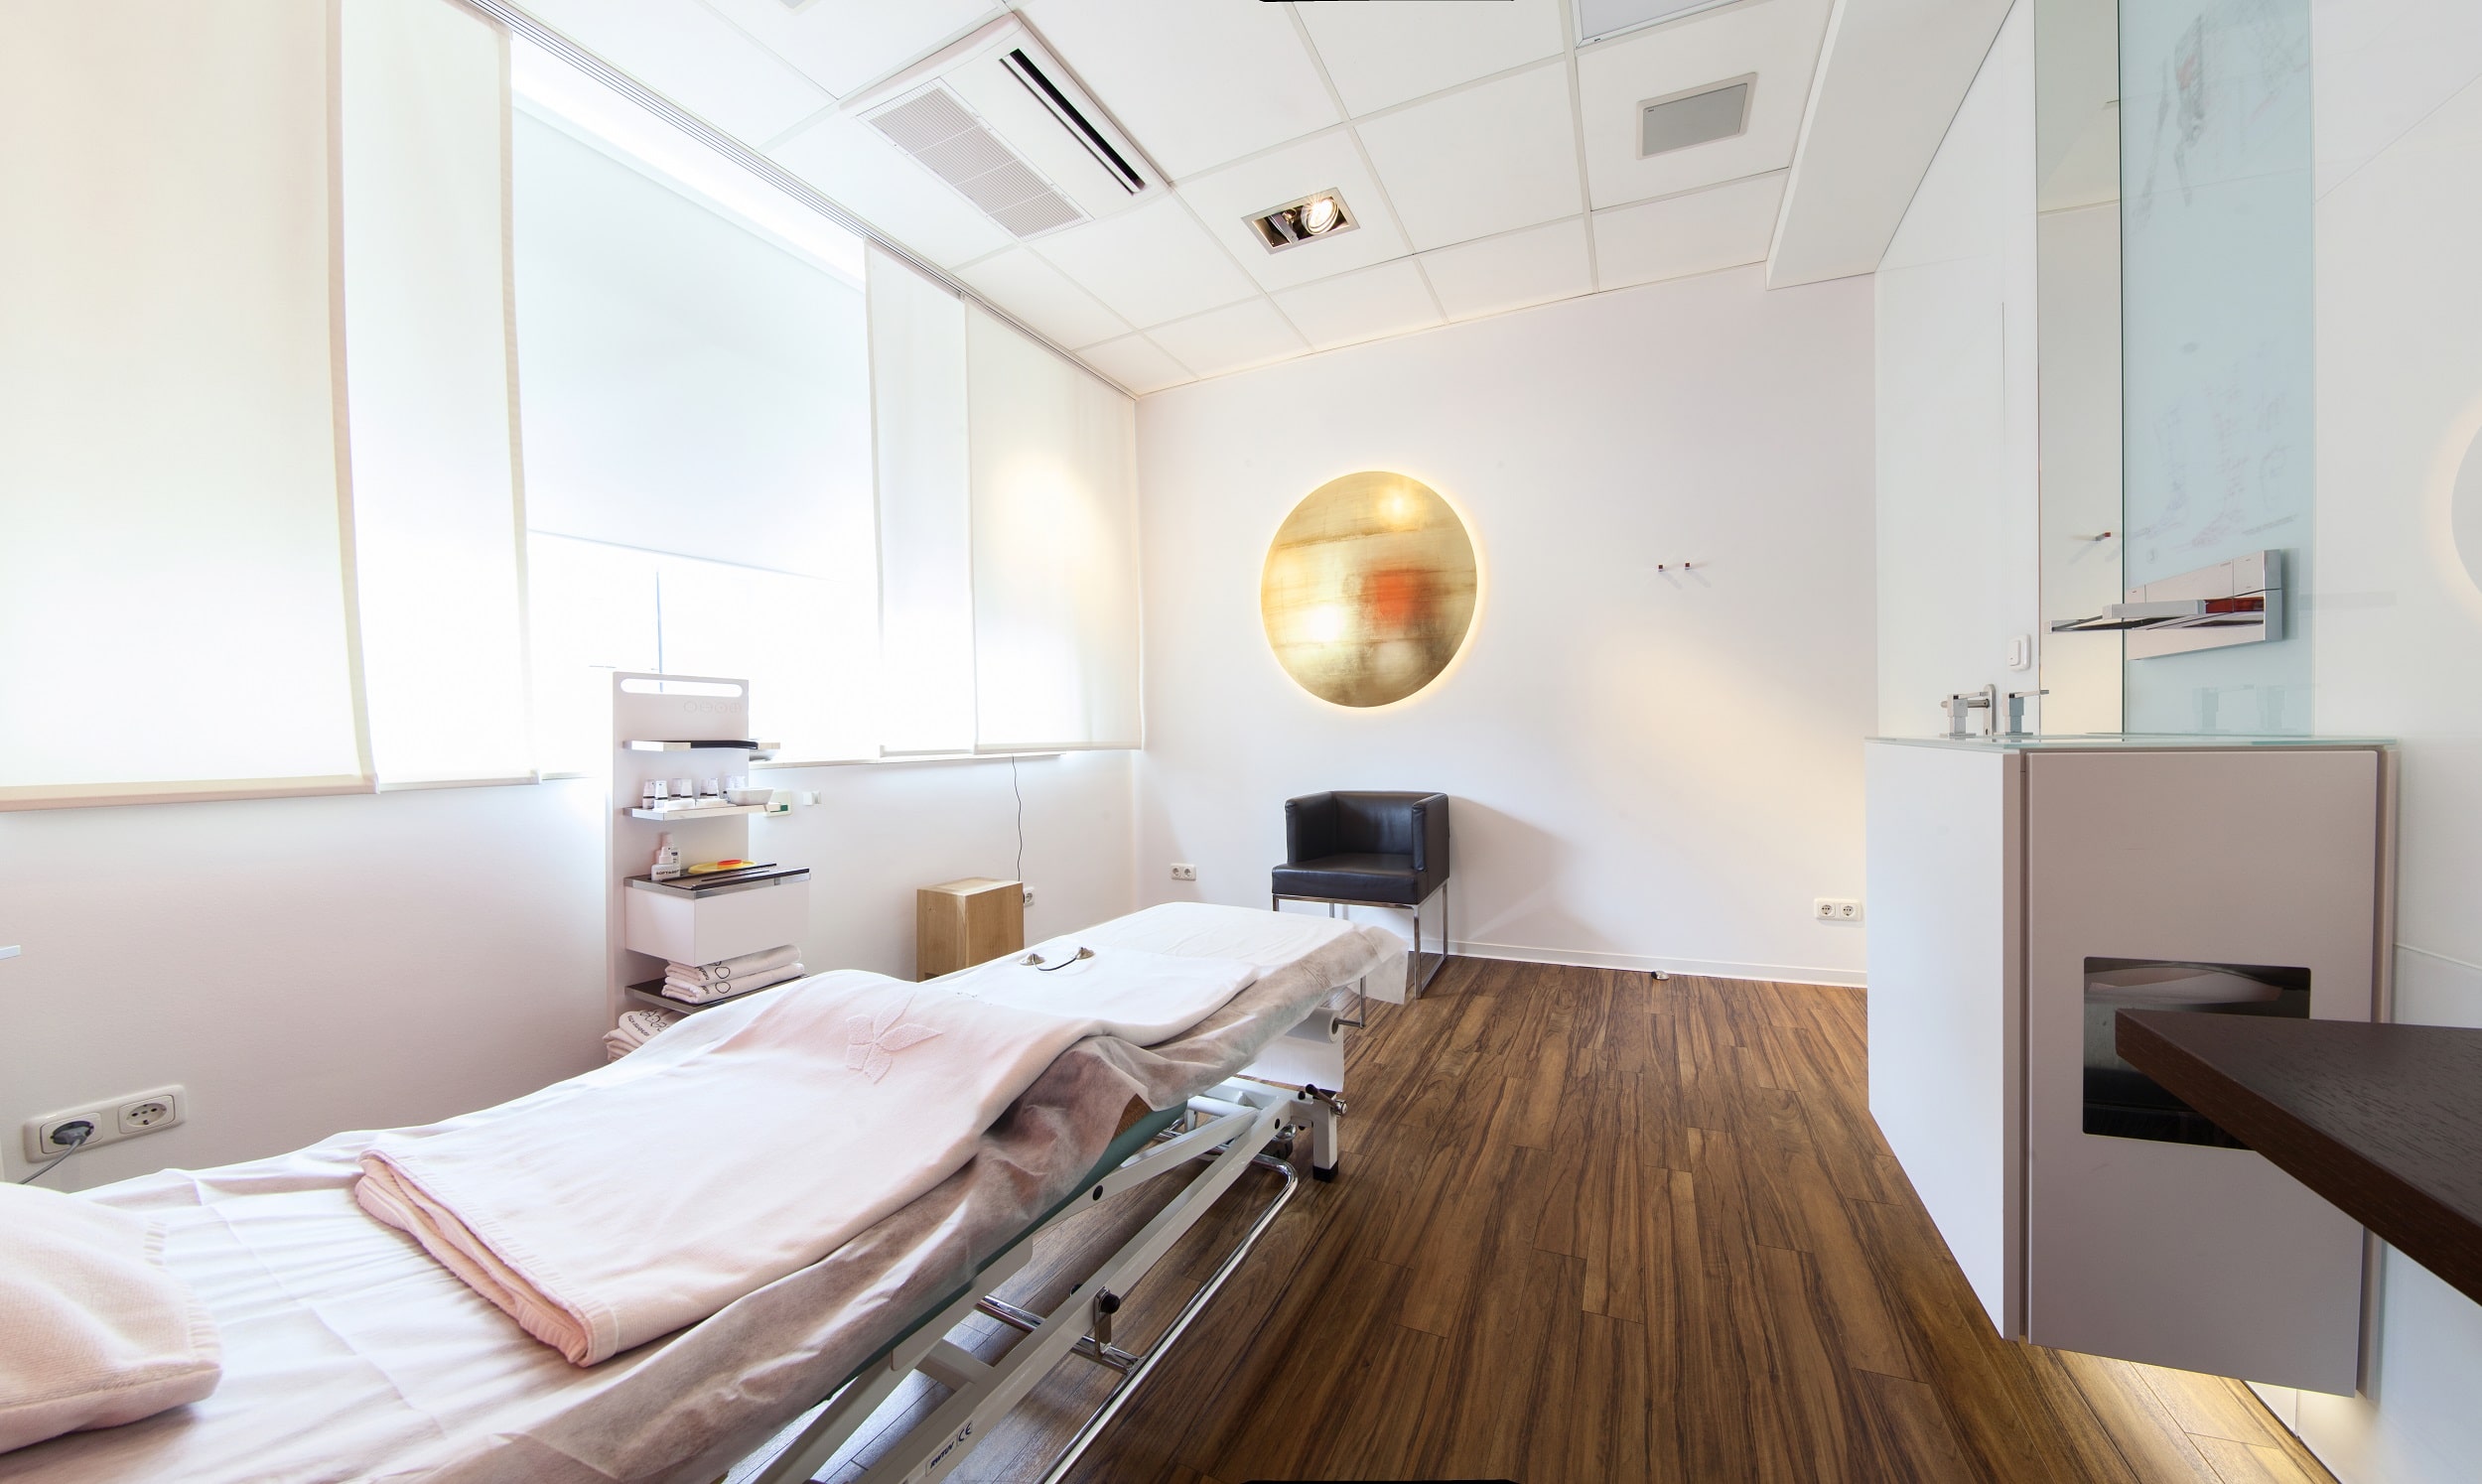 A treatment room at the Naturheilzentrum Bottrop